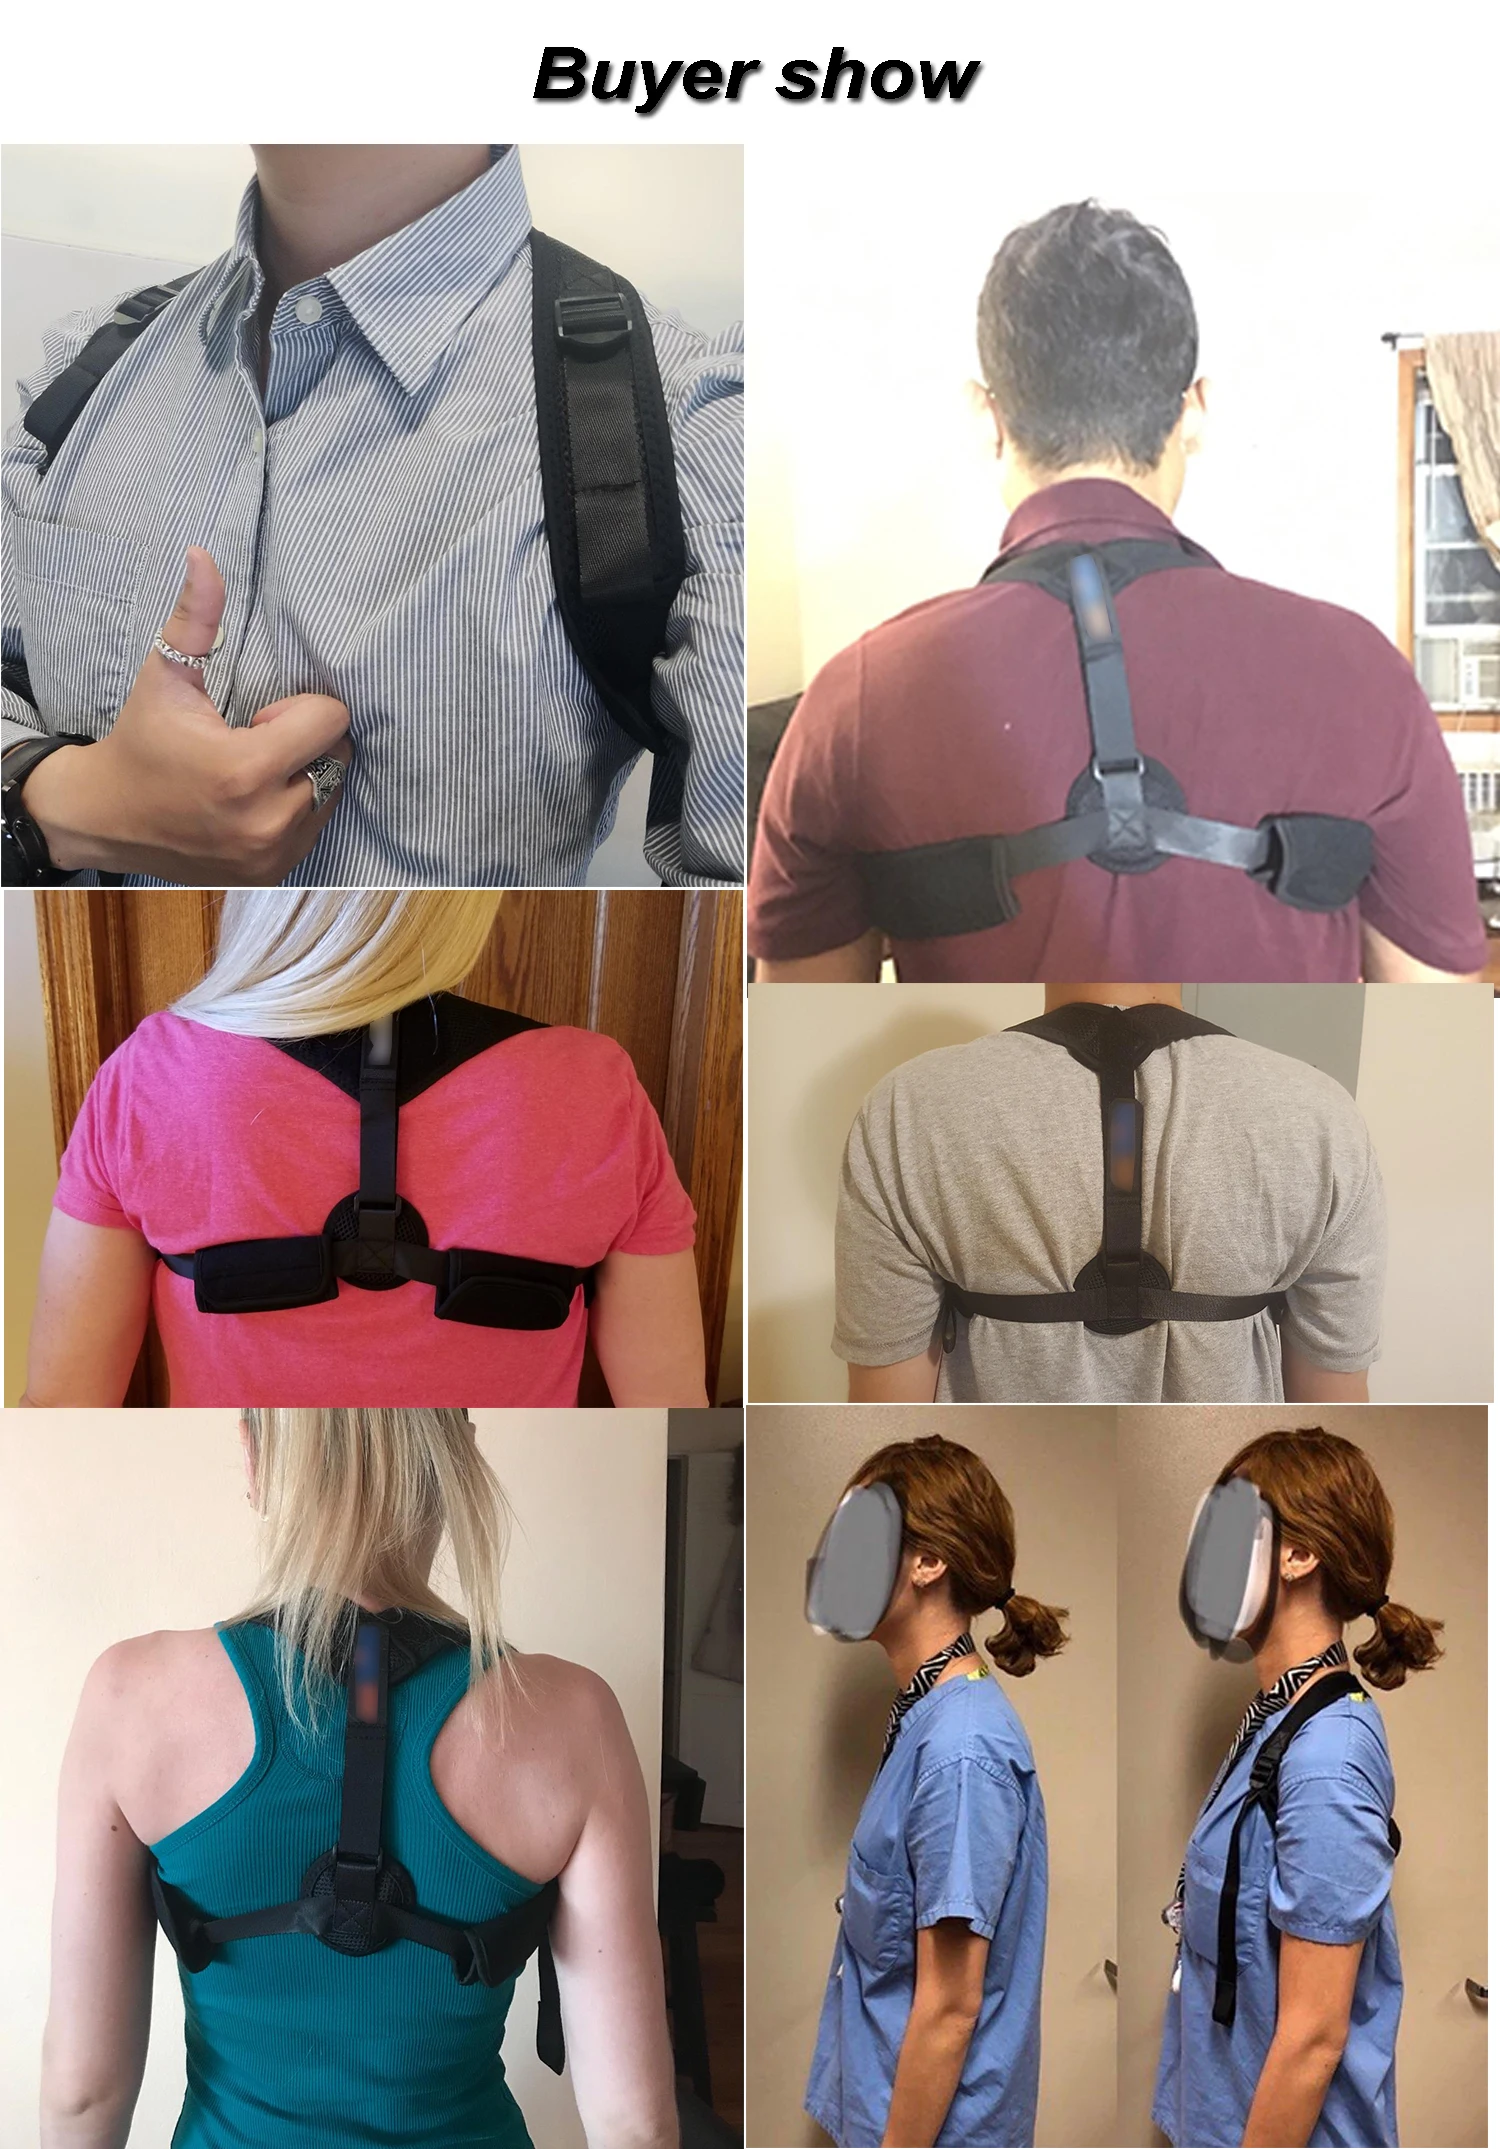 New Amazon Custom FDA CE Effective Comfortable Adjustable Posture Correct Brace for Women Men Upper Back Brace Spinal Support